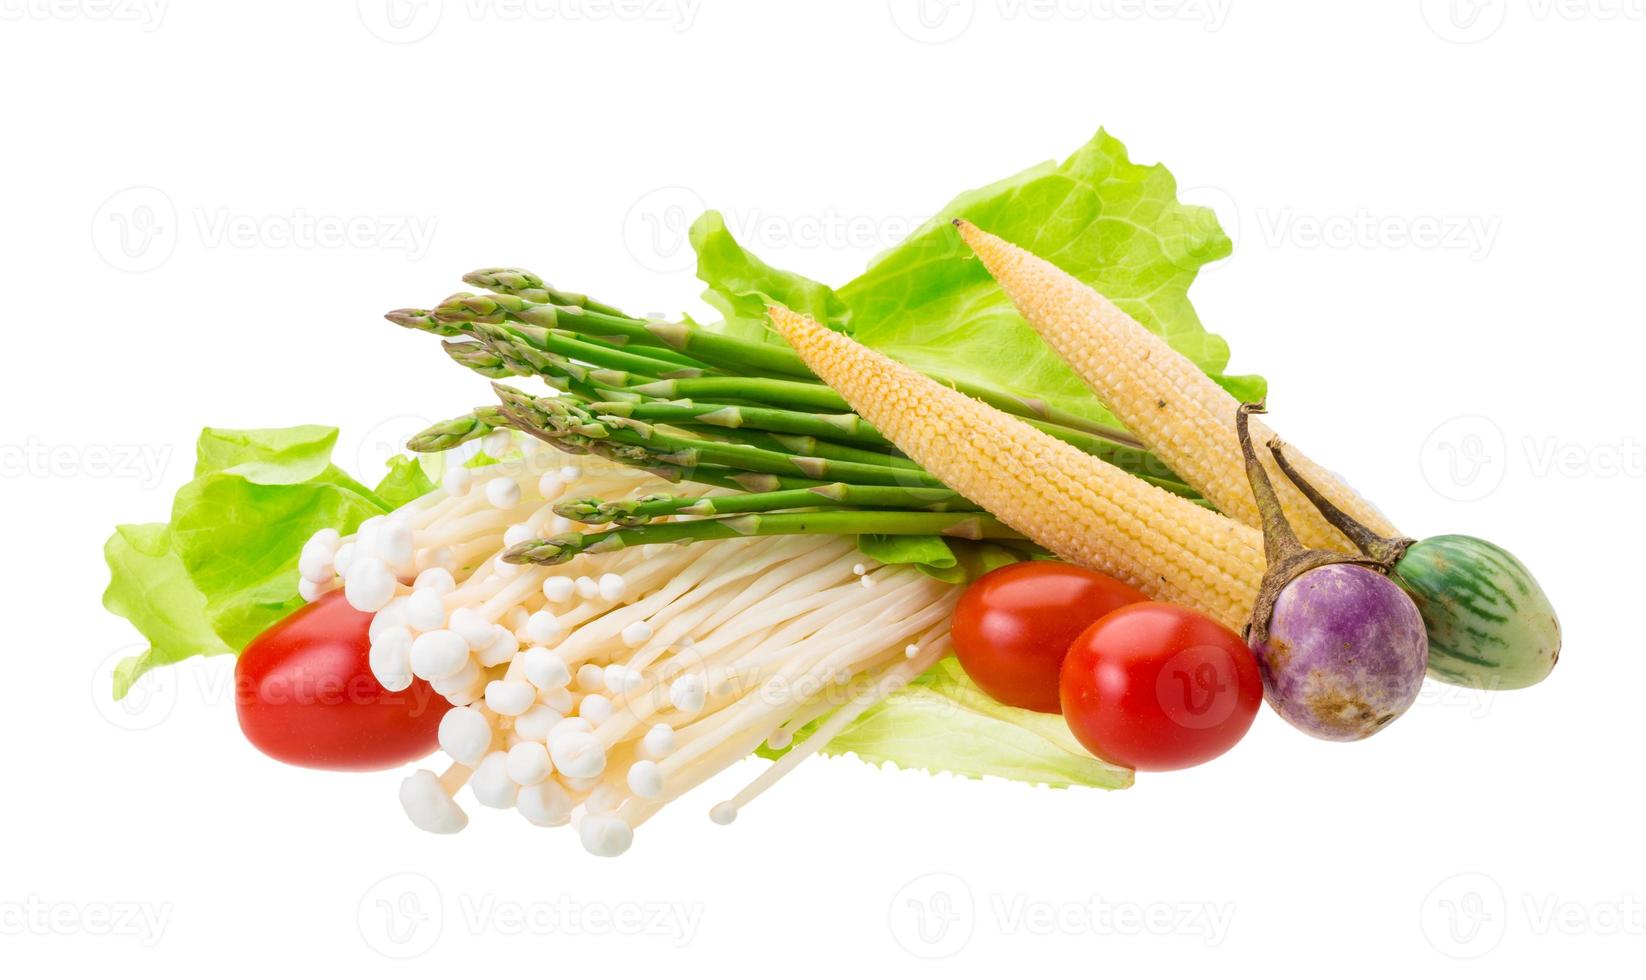 fungo giapponese, asparagi, melanzane, mais e insalata su sfondo bianco foto